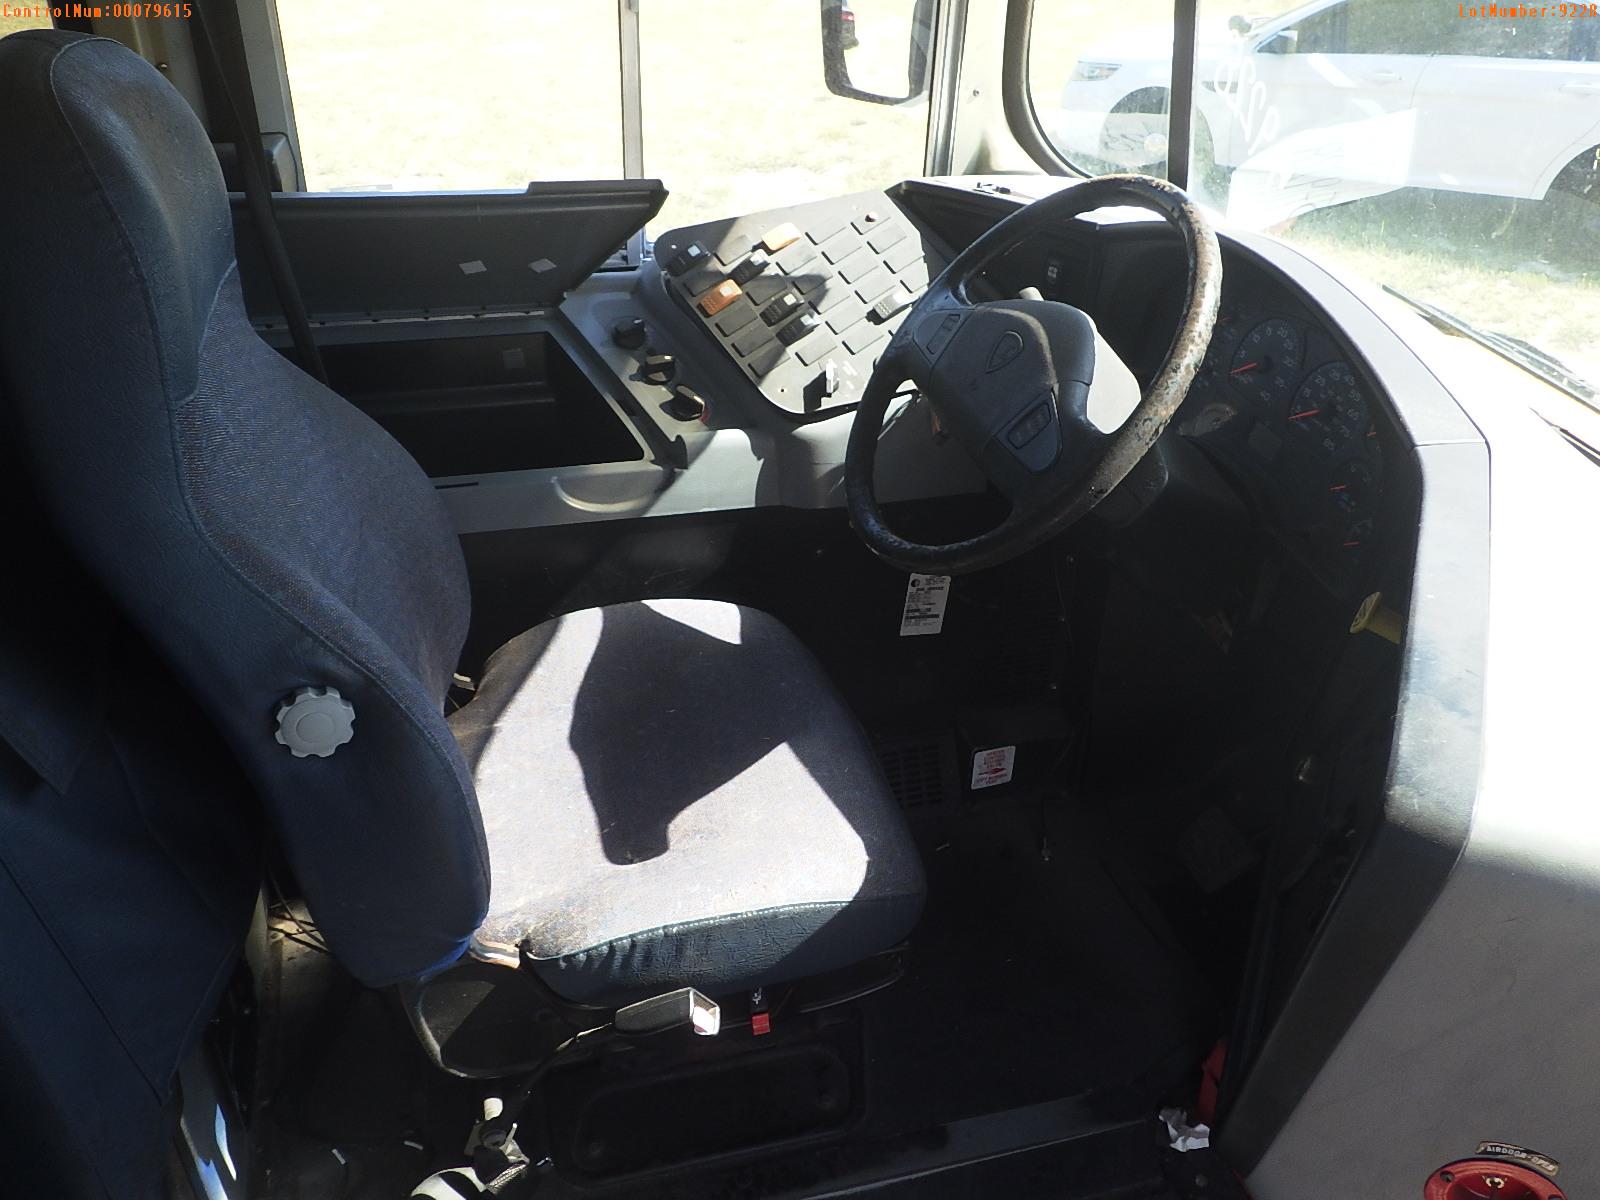 5-09228 (Trucks-Buses)  Seller: Gov-Hillsborough County School 2007 ICRP PB105